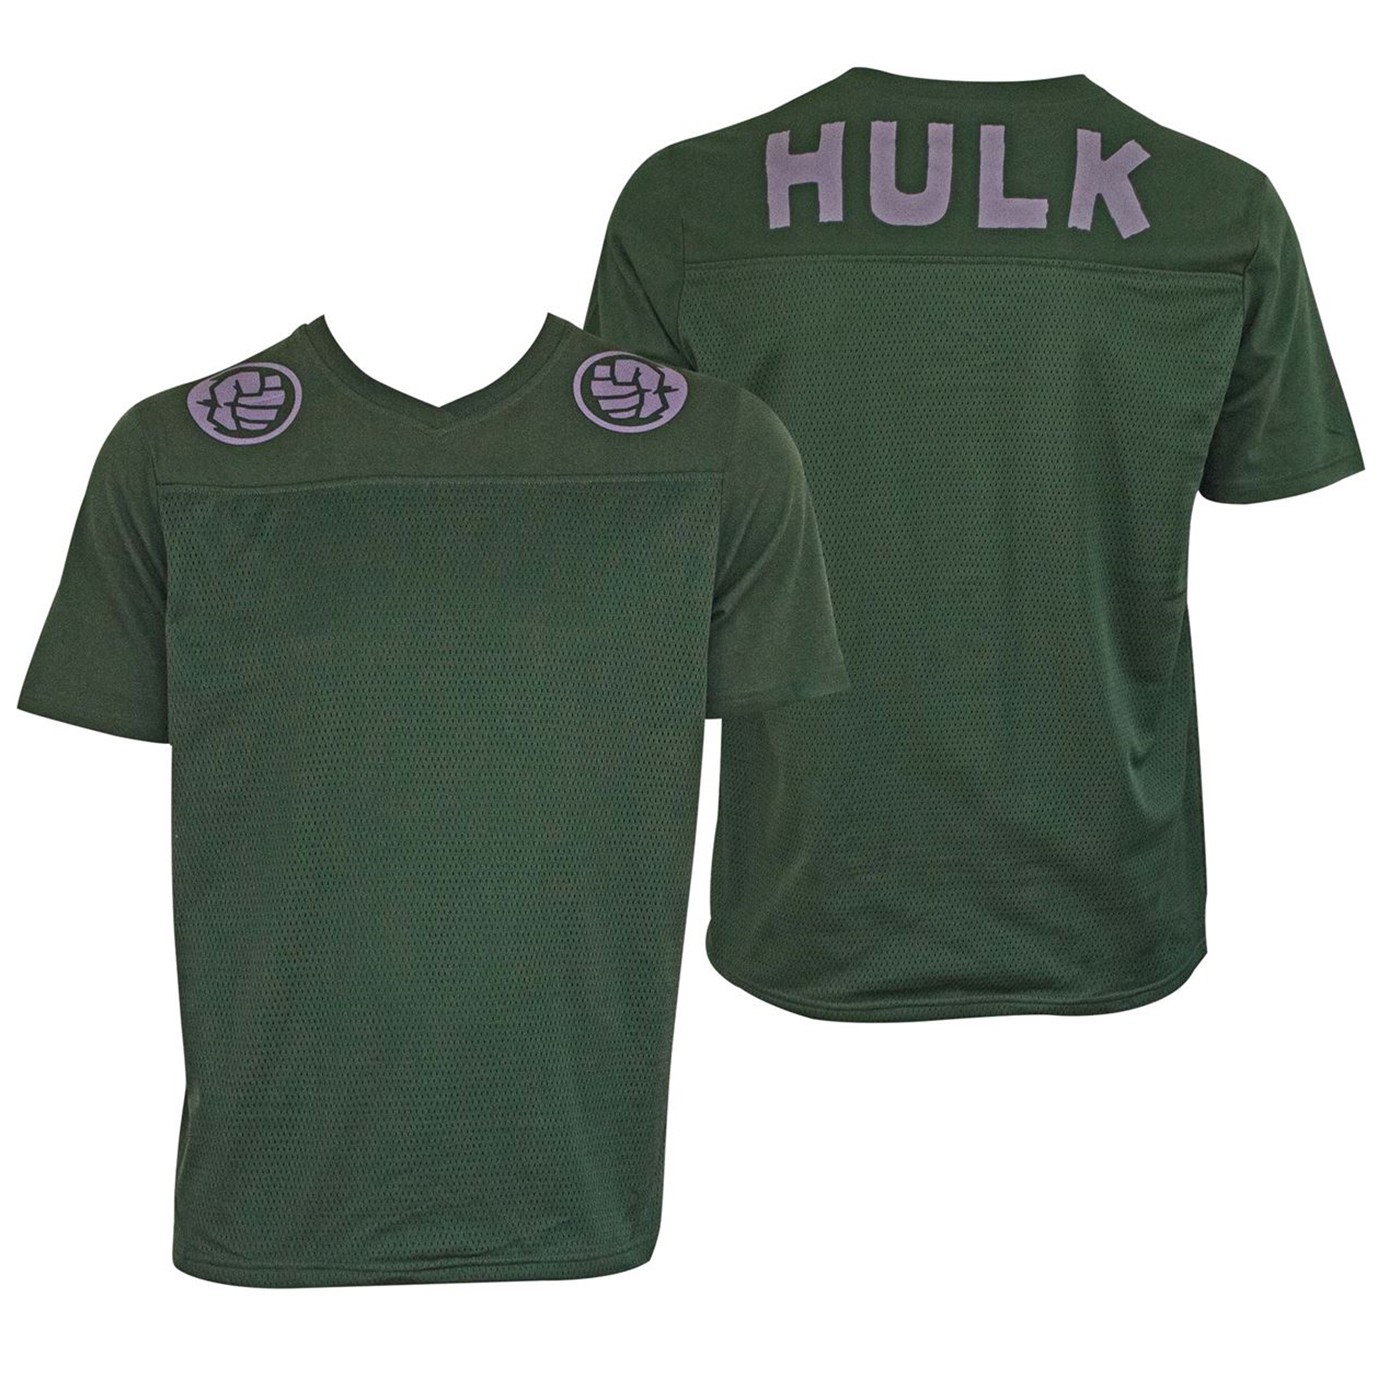 Incredible Hulk Football Jersey Men's Green T-Shirt